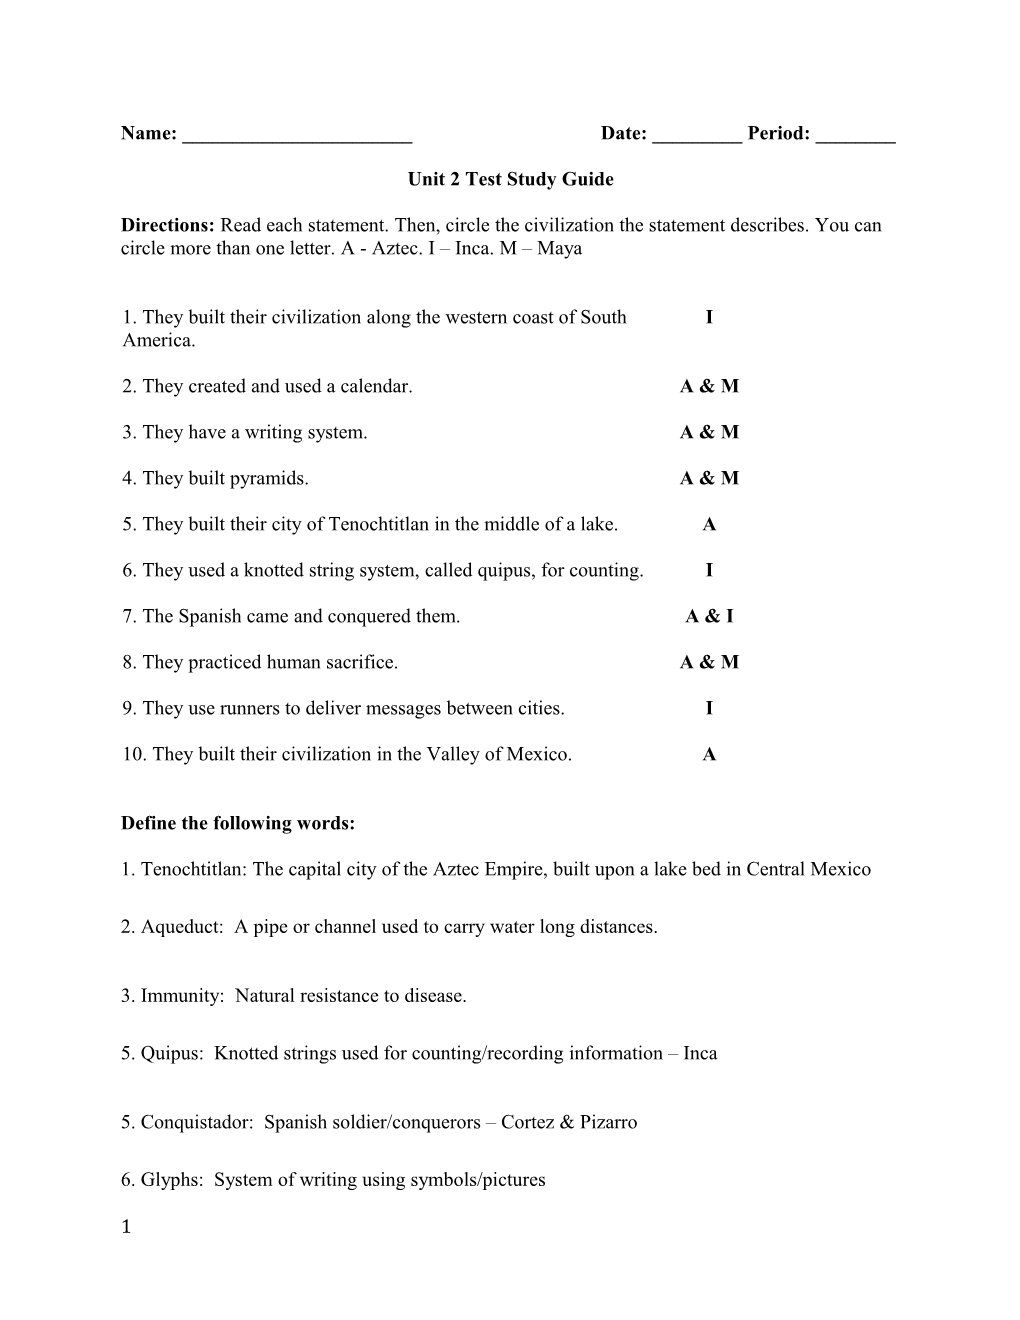 Unit 2 Test Study Guide